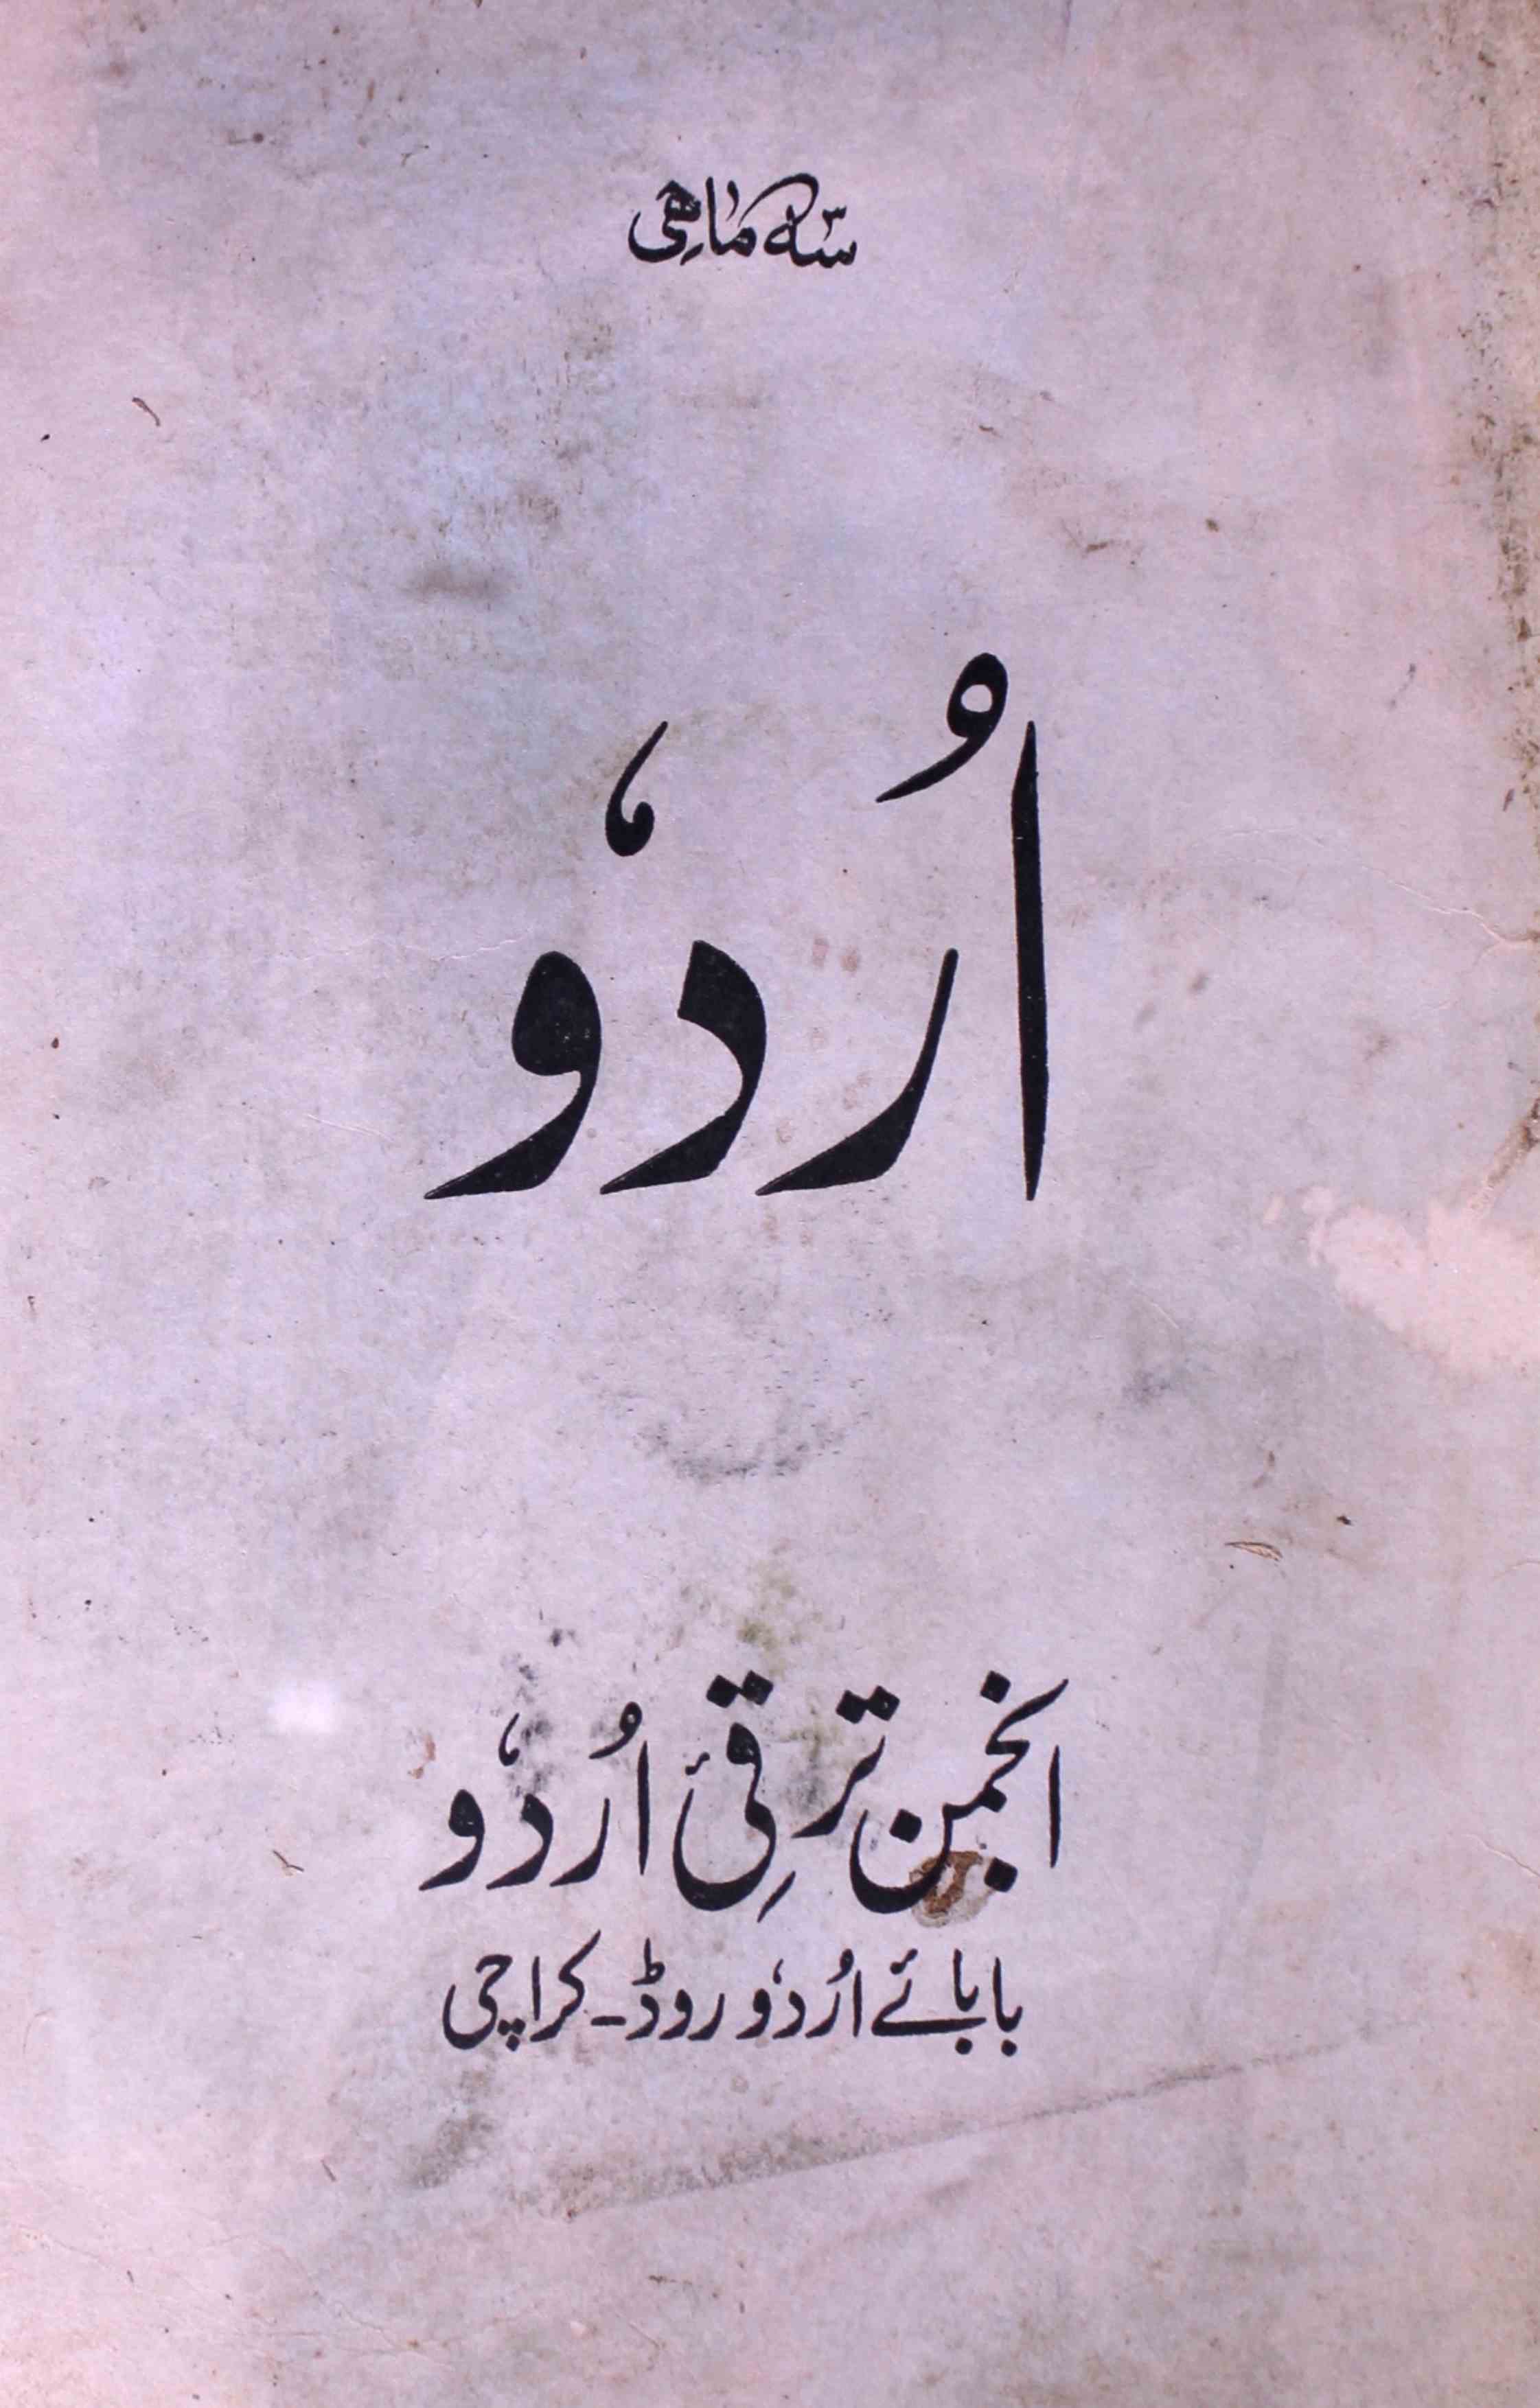 उर्दू